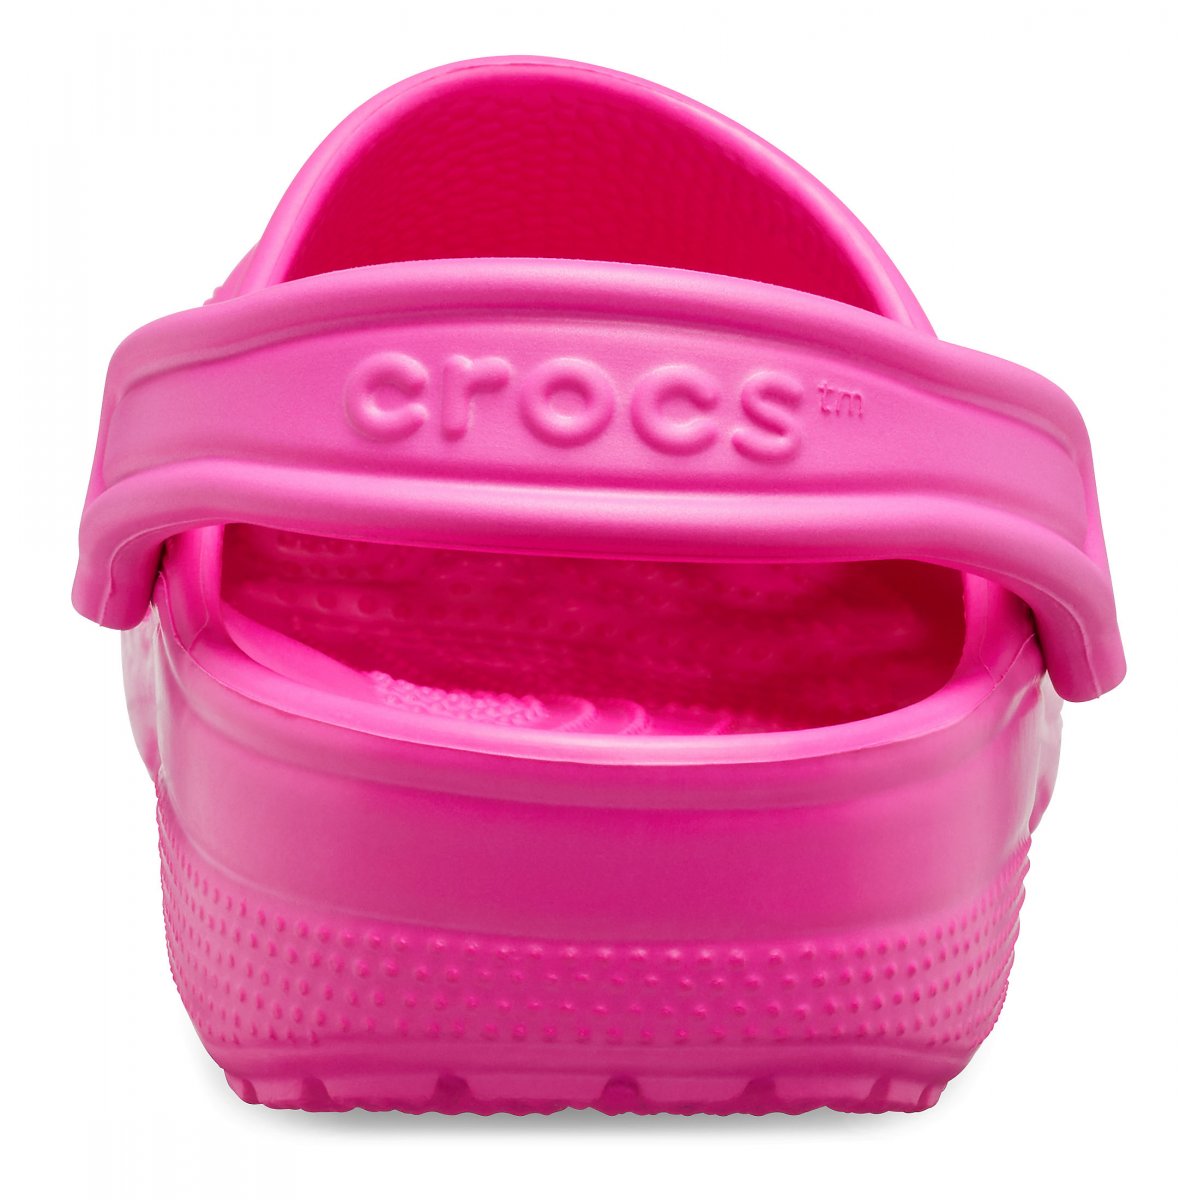 Crocs sandalo da donna Classic Sabot 10001-6QQ rosa elettrico